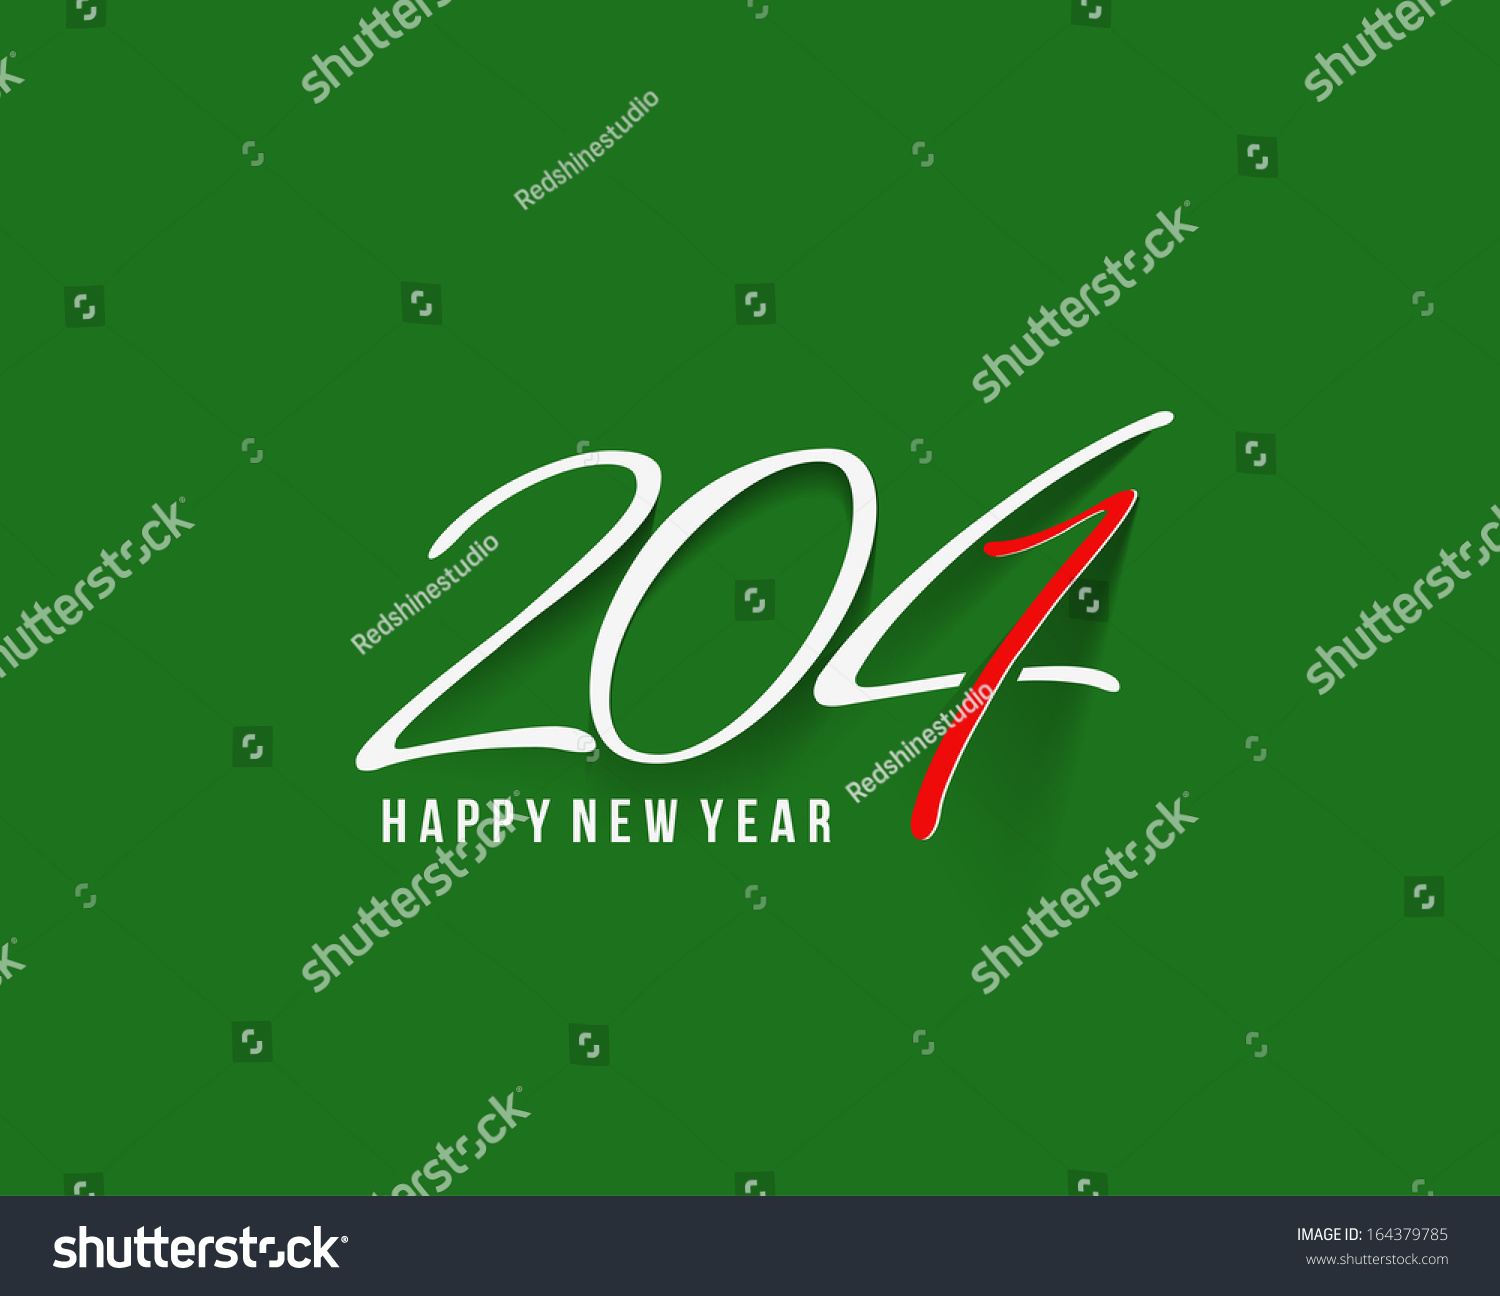 free clipart happy new year text - photo #19